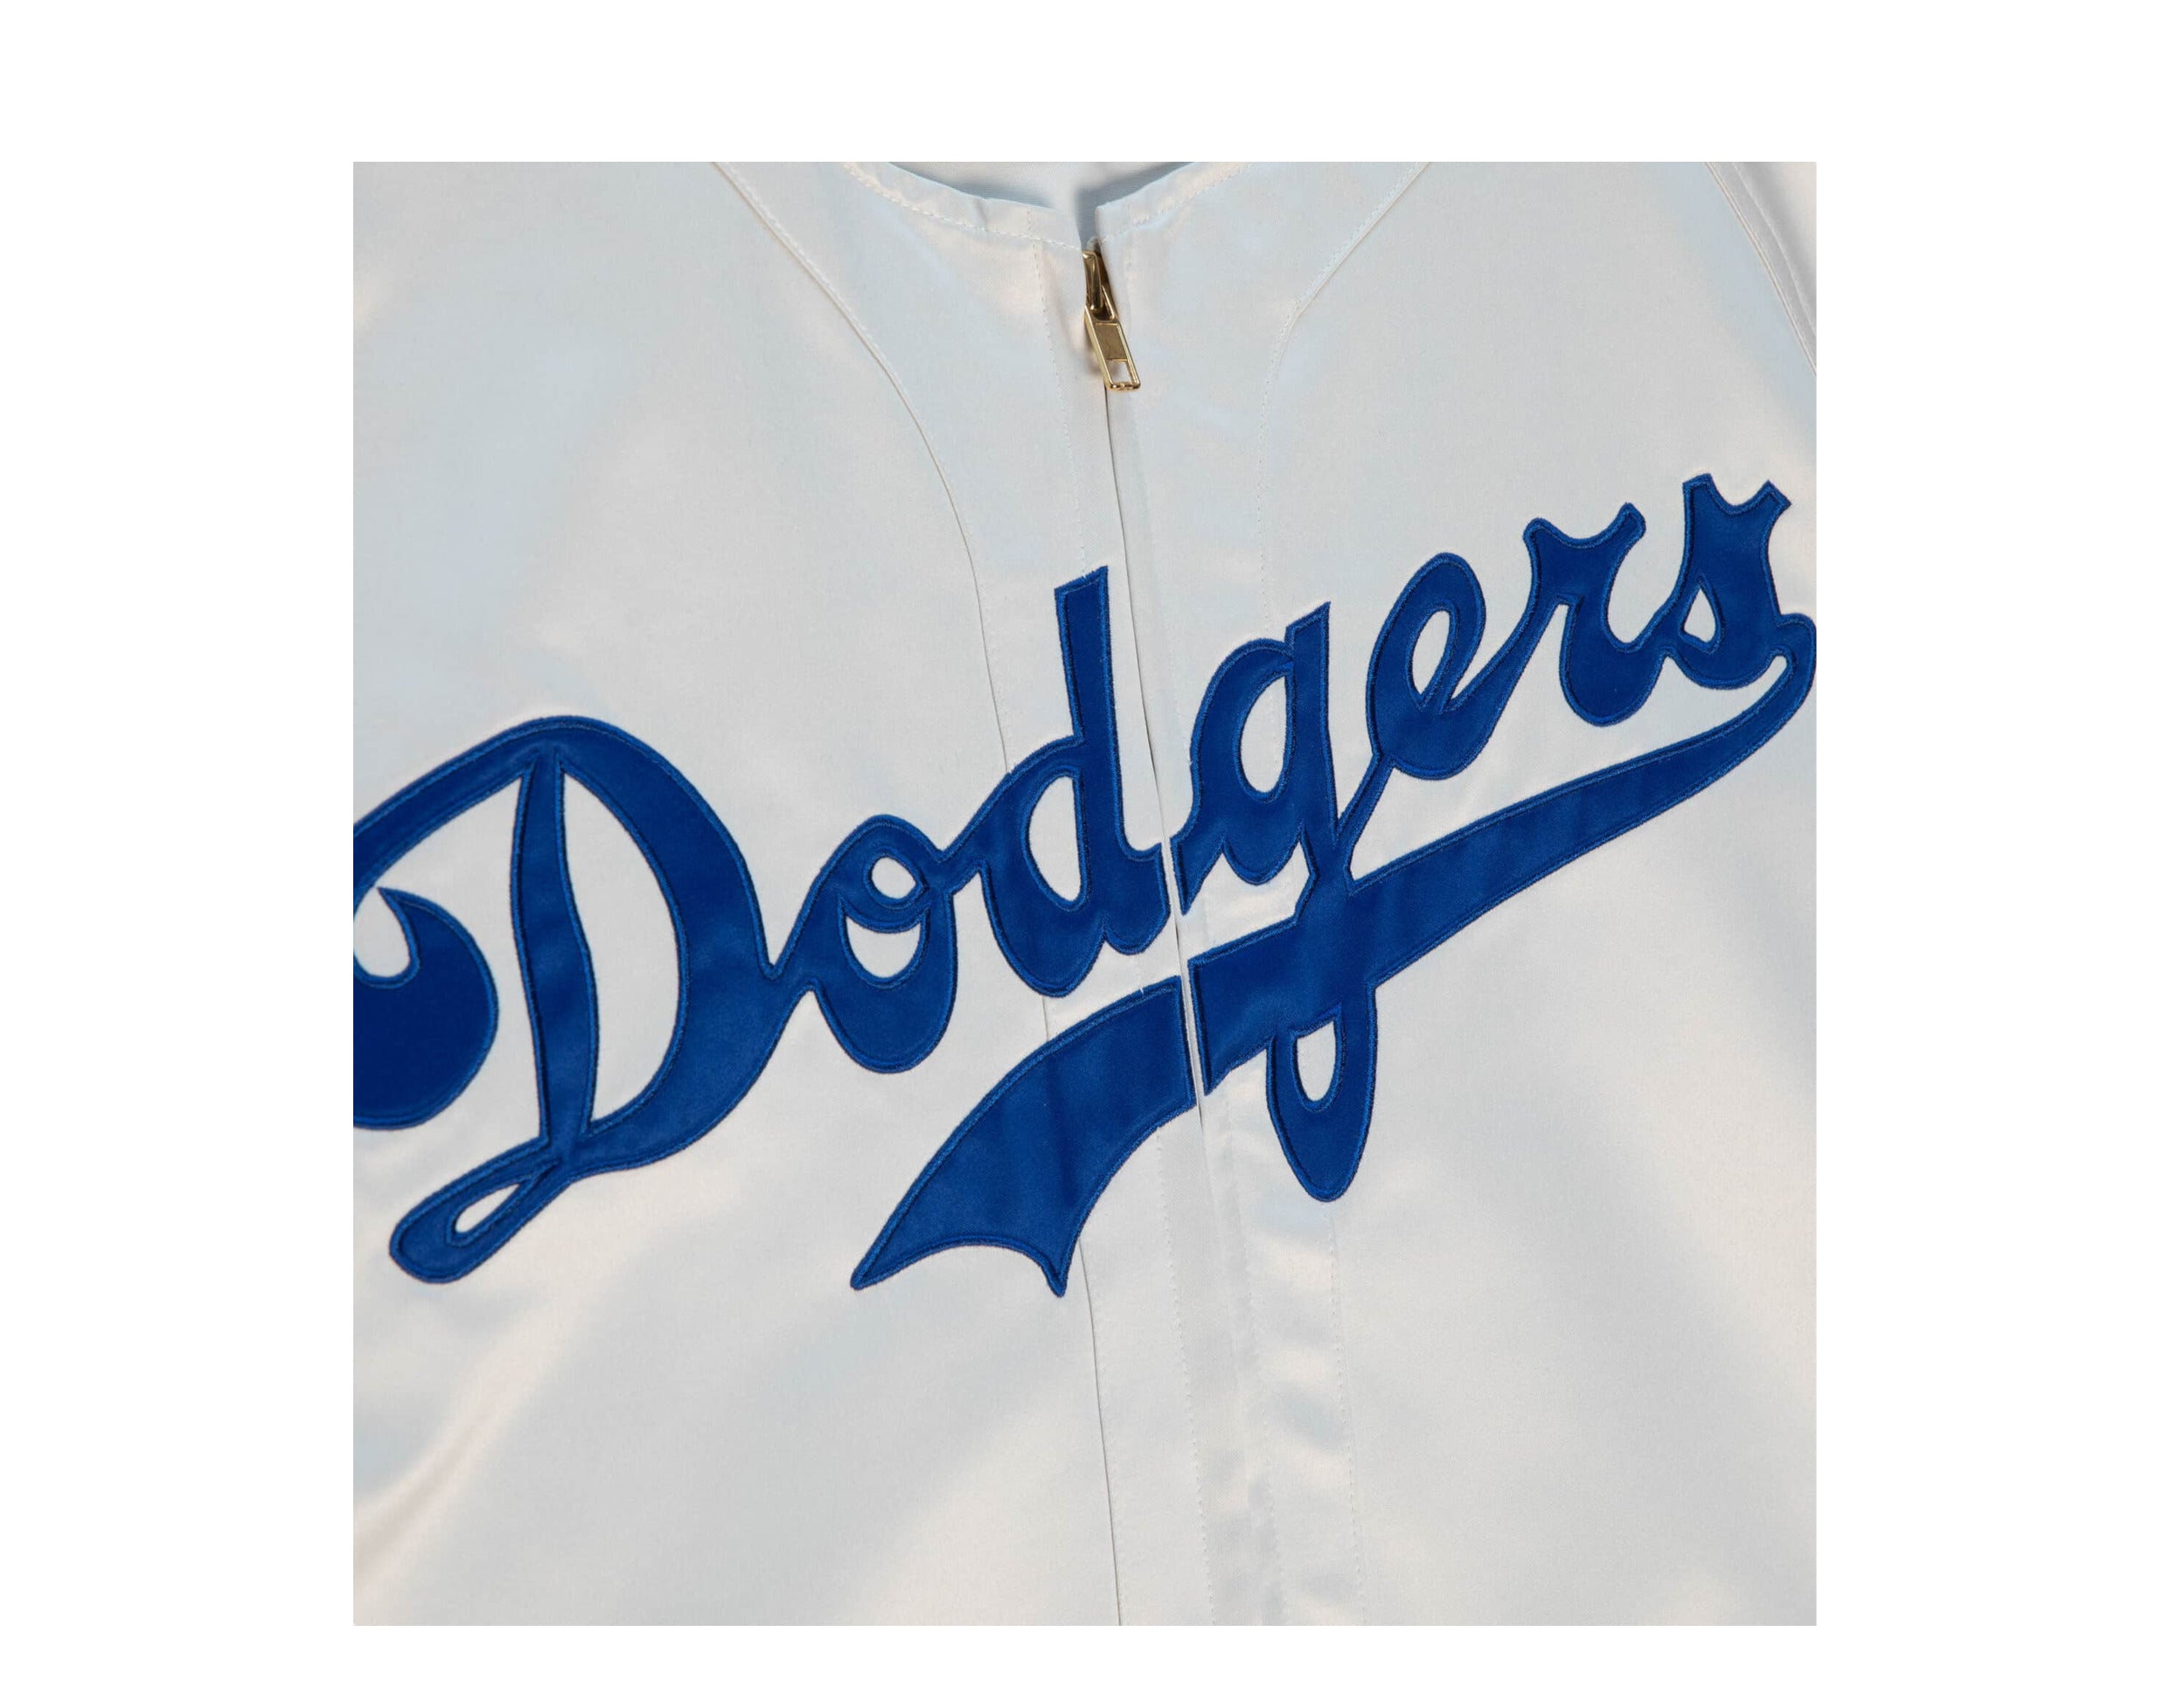 L.A. Dodgers Baseball Jerseys, Dodgers Jerseys, Authentic Dodgers